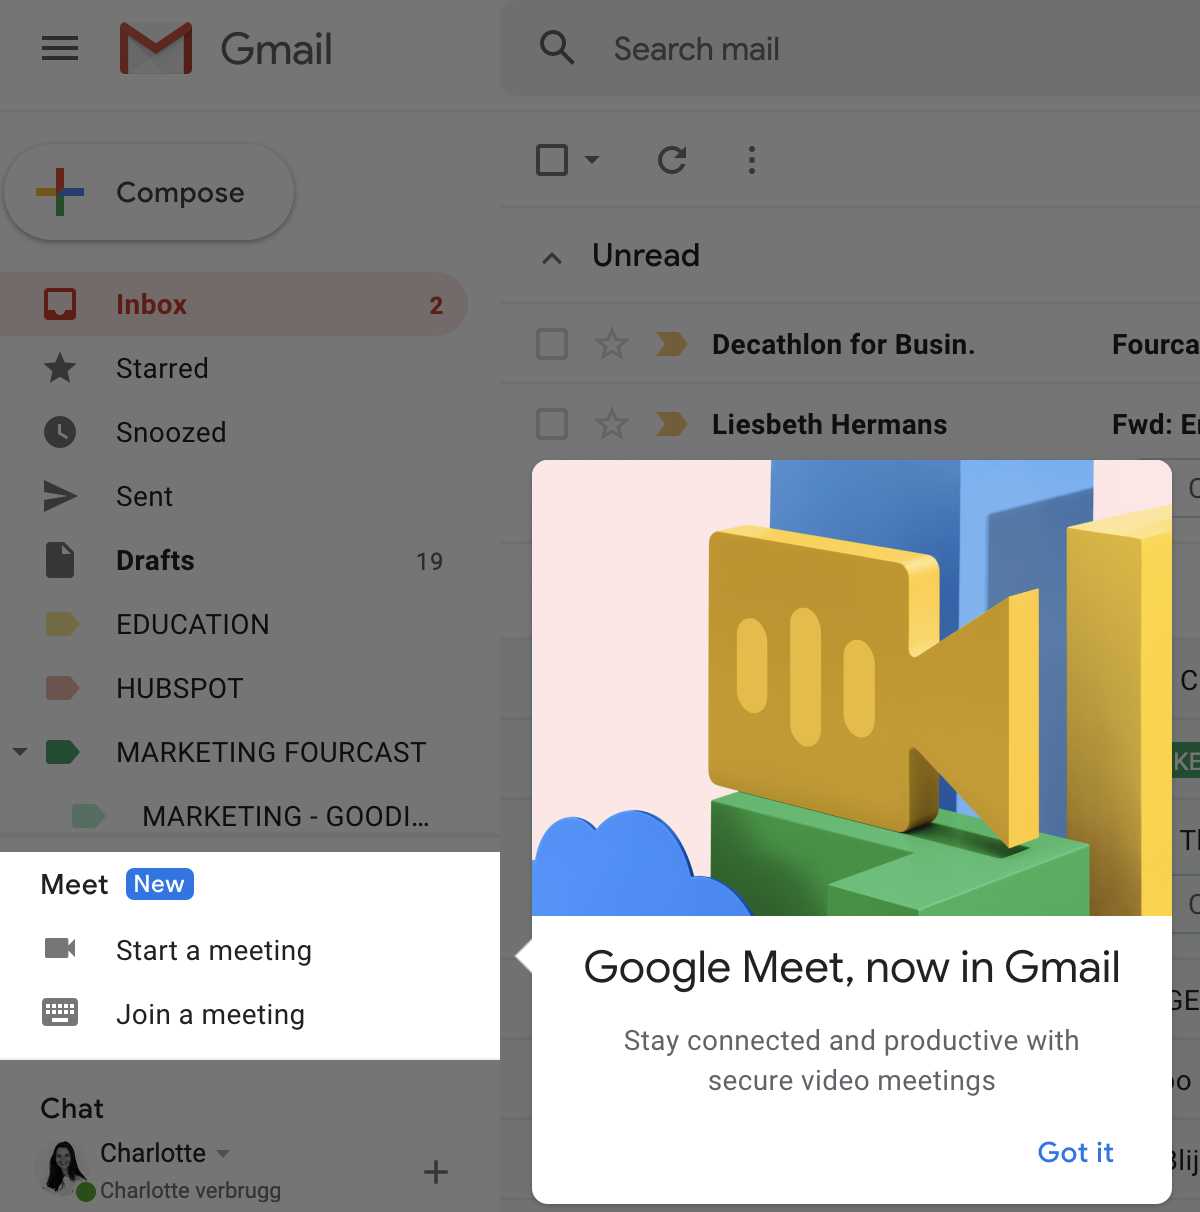 Google Meet Gmail functionality integration